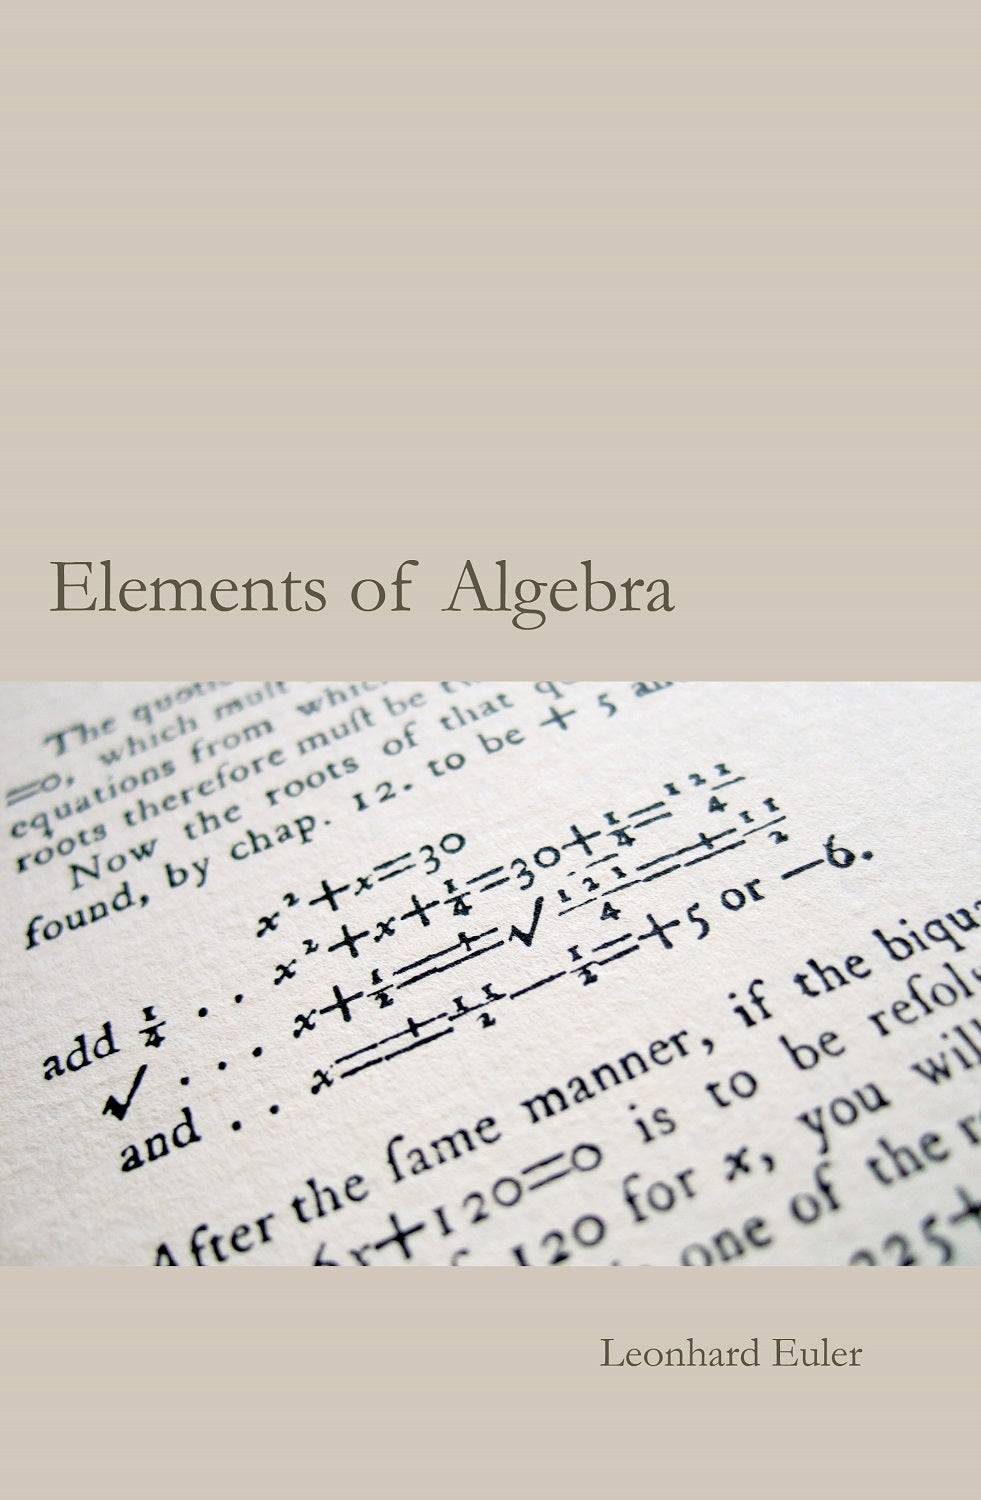 Euler's Elements of Algebra